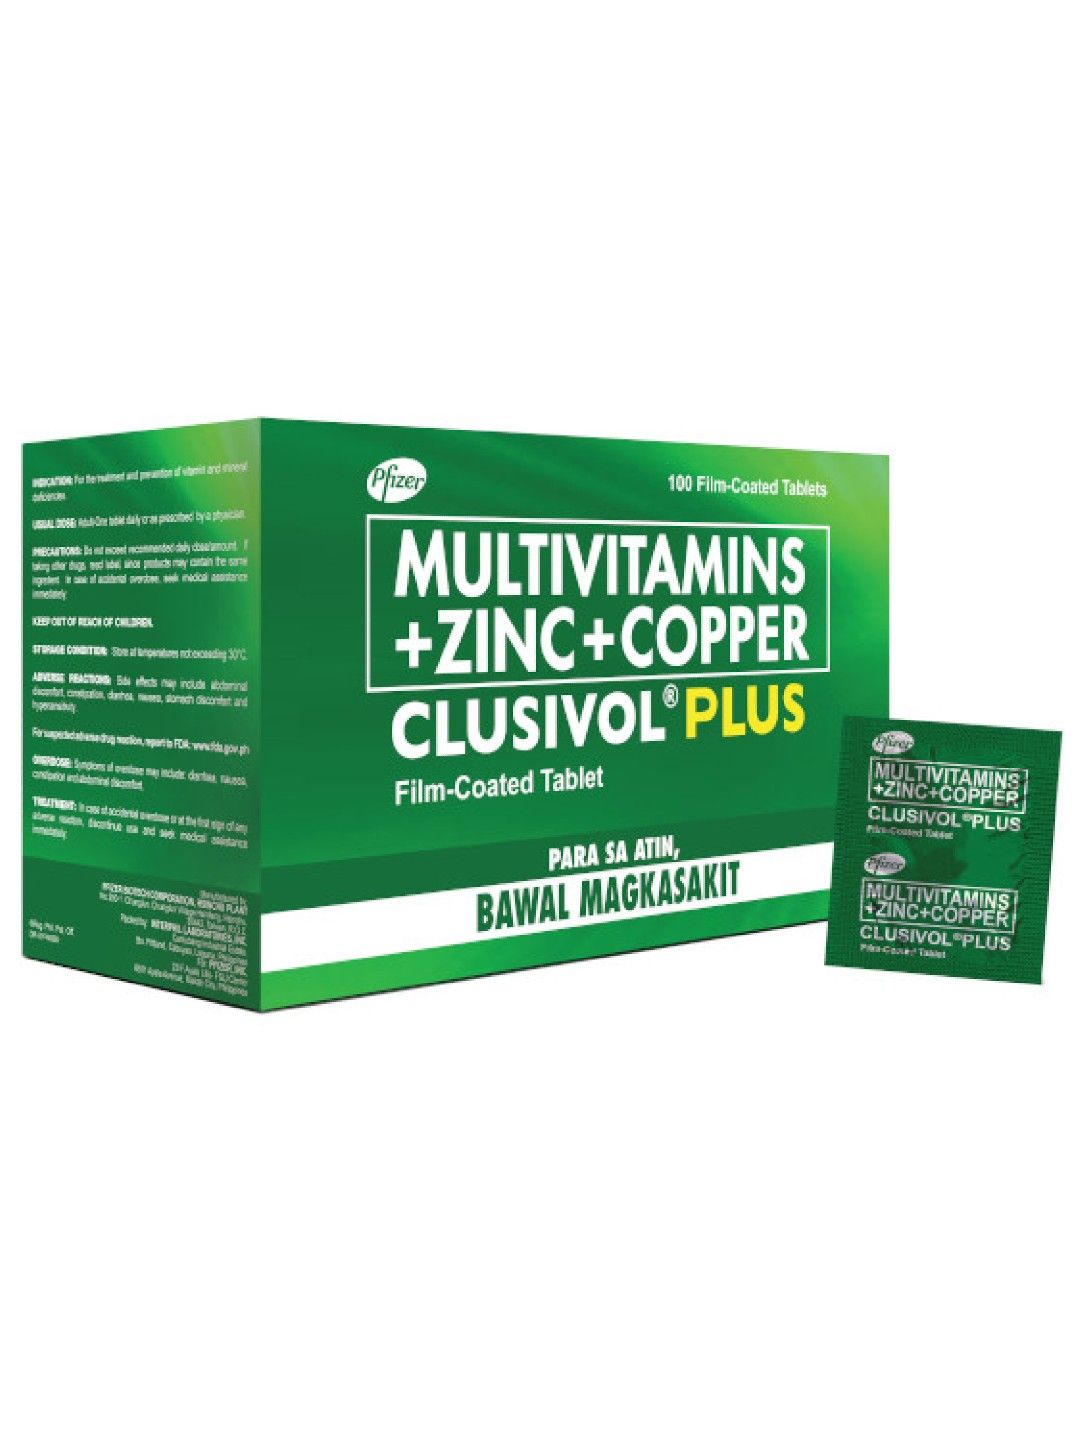 Clusivol Plus Multivitamins + Zinc + Copper Box (100s)